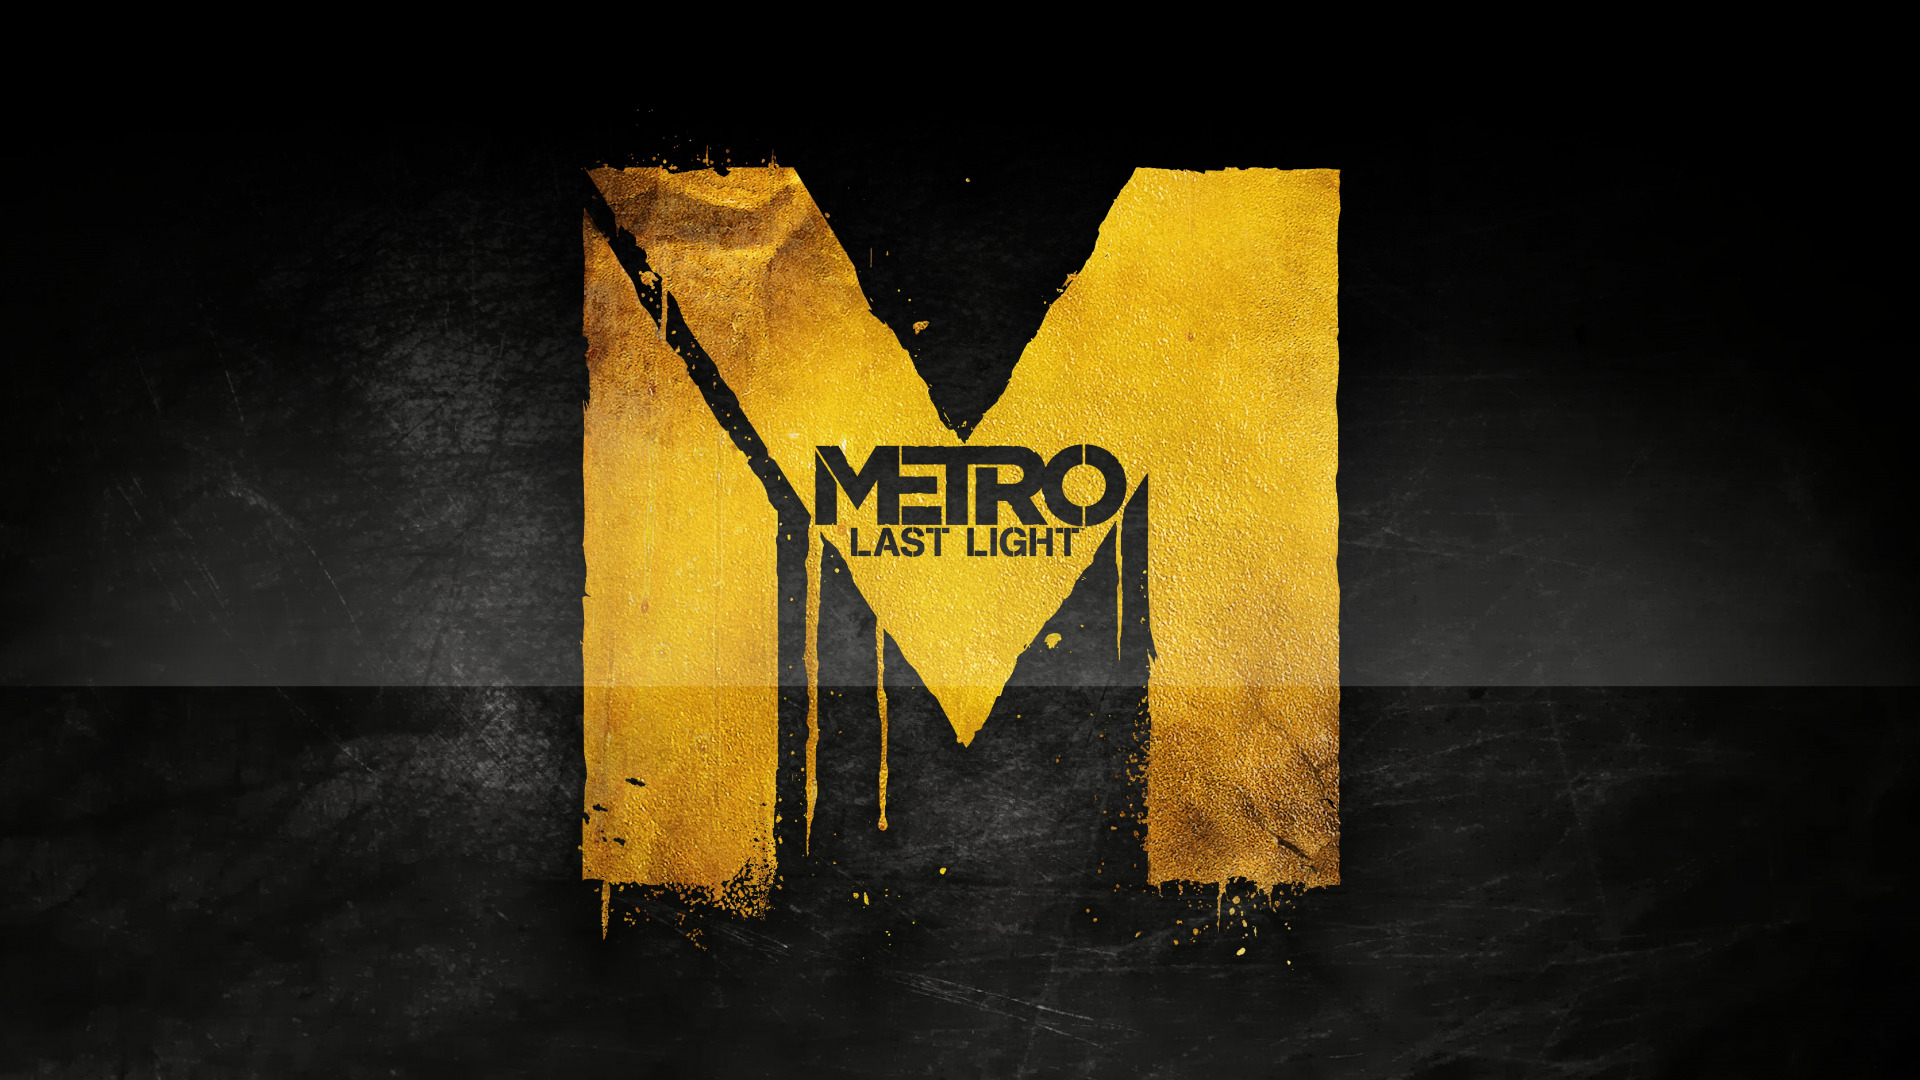 Обложка игры Metro: Last Light